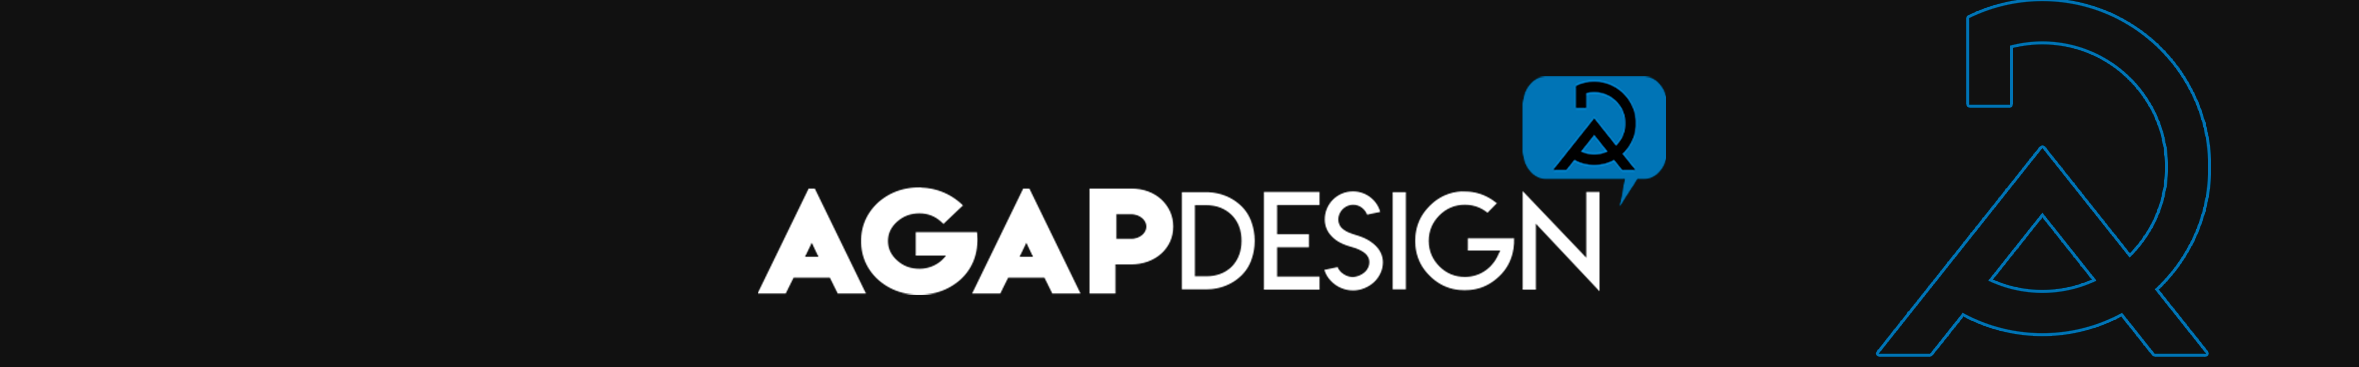 Agap Design's profile banner